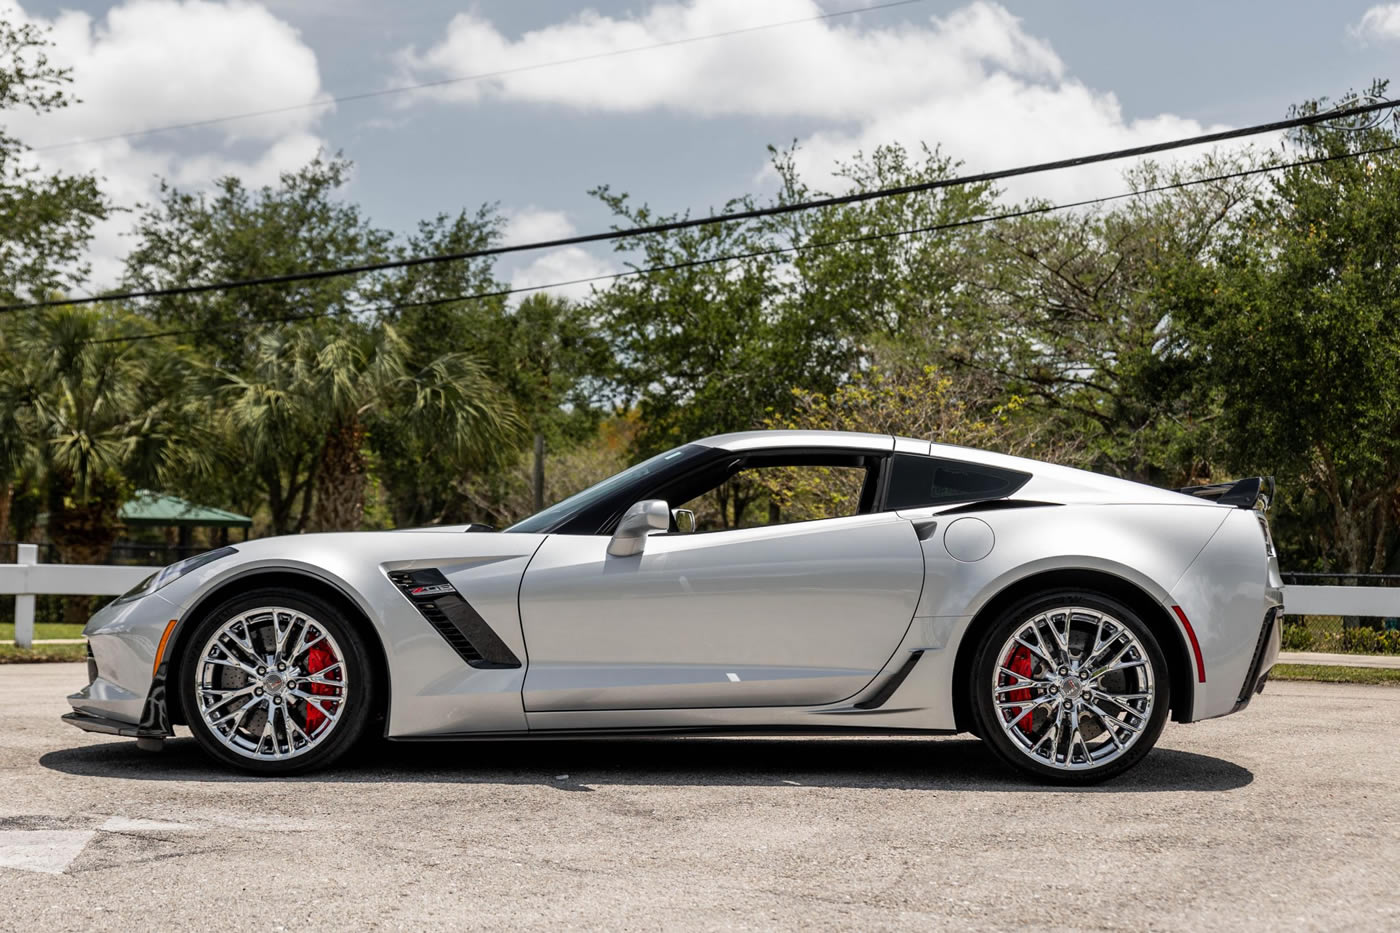 2015 Corvette Z06 Coupe 3LZ Z07 7-Speed in Blade Silver Metallic